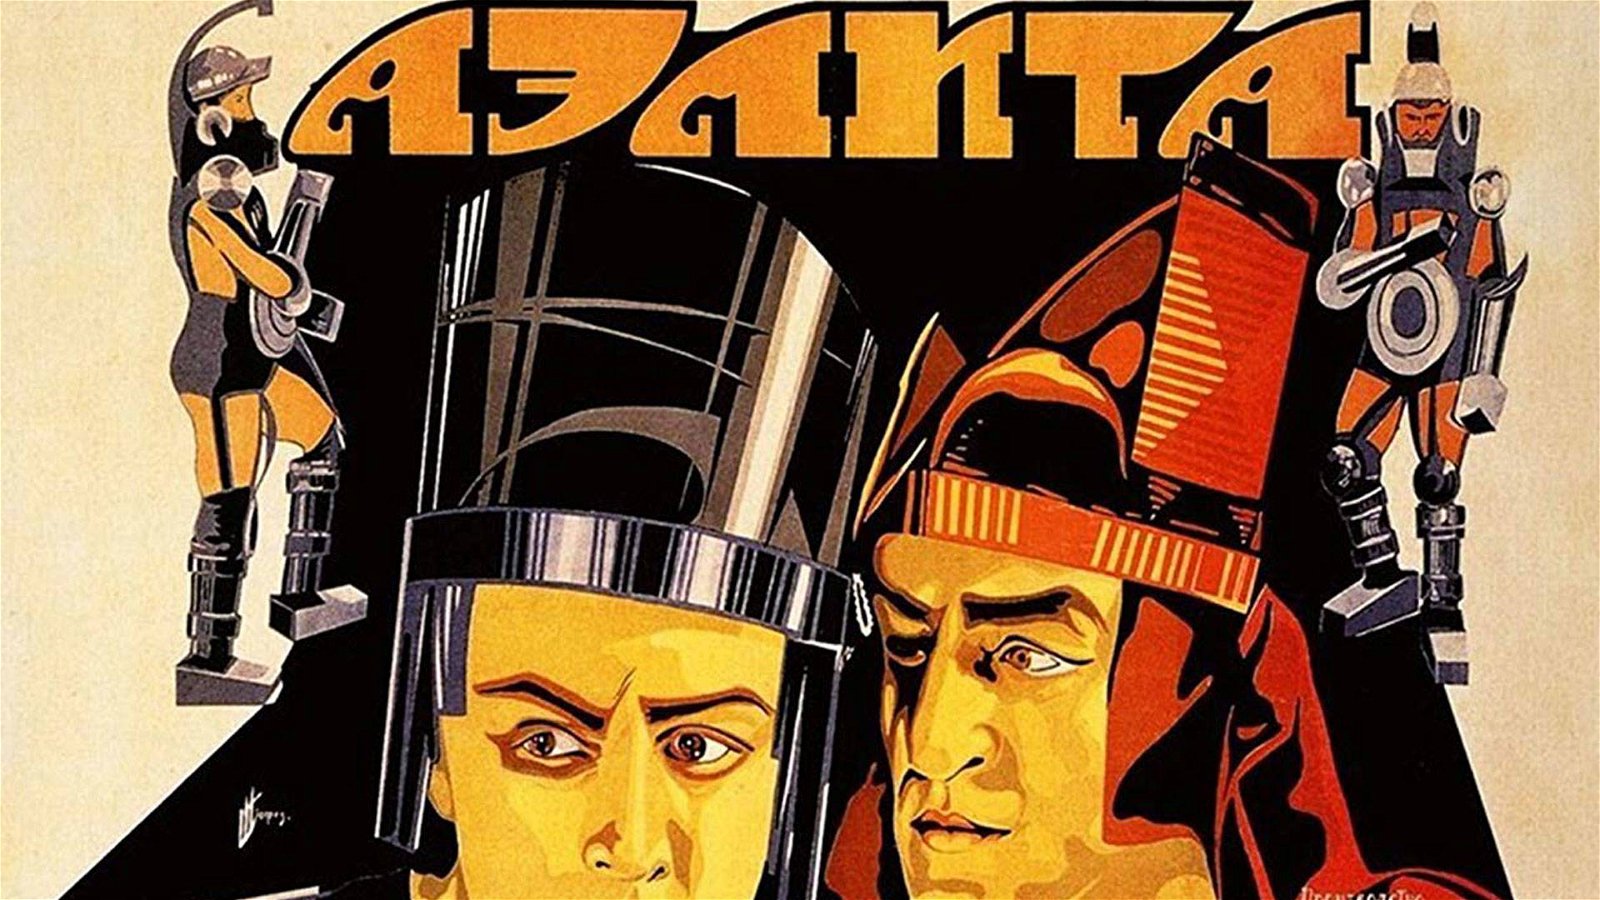 Immagine di Aelita, film di fantascienza sovietico da riscoprire